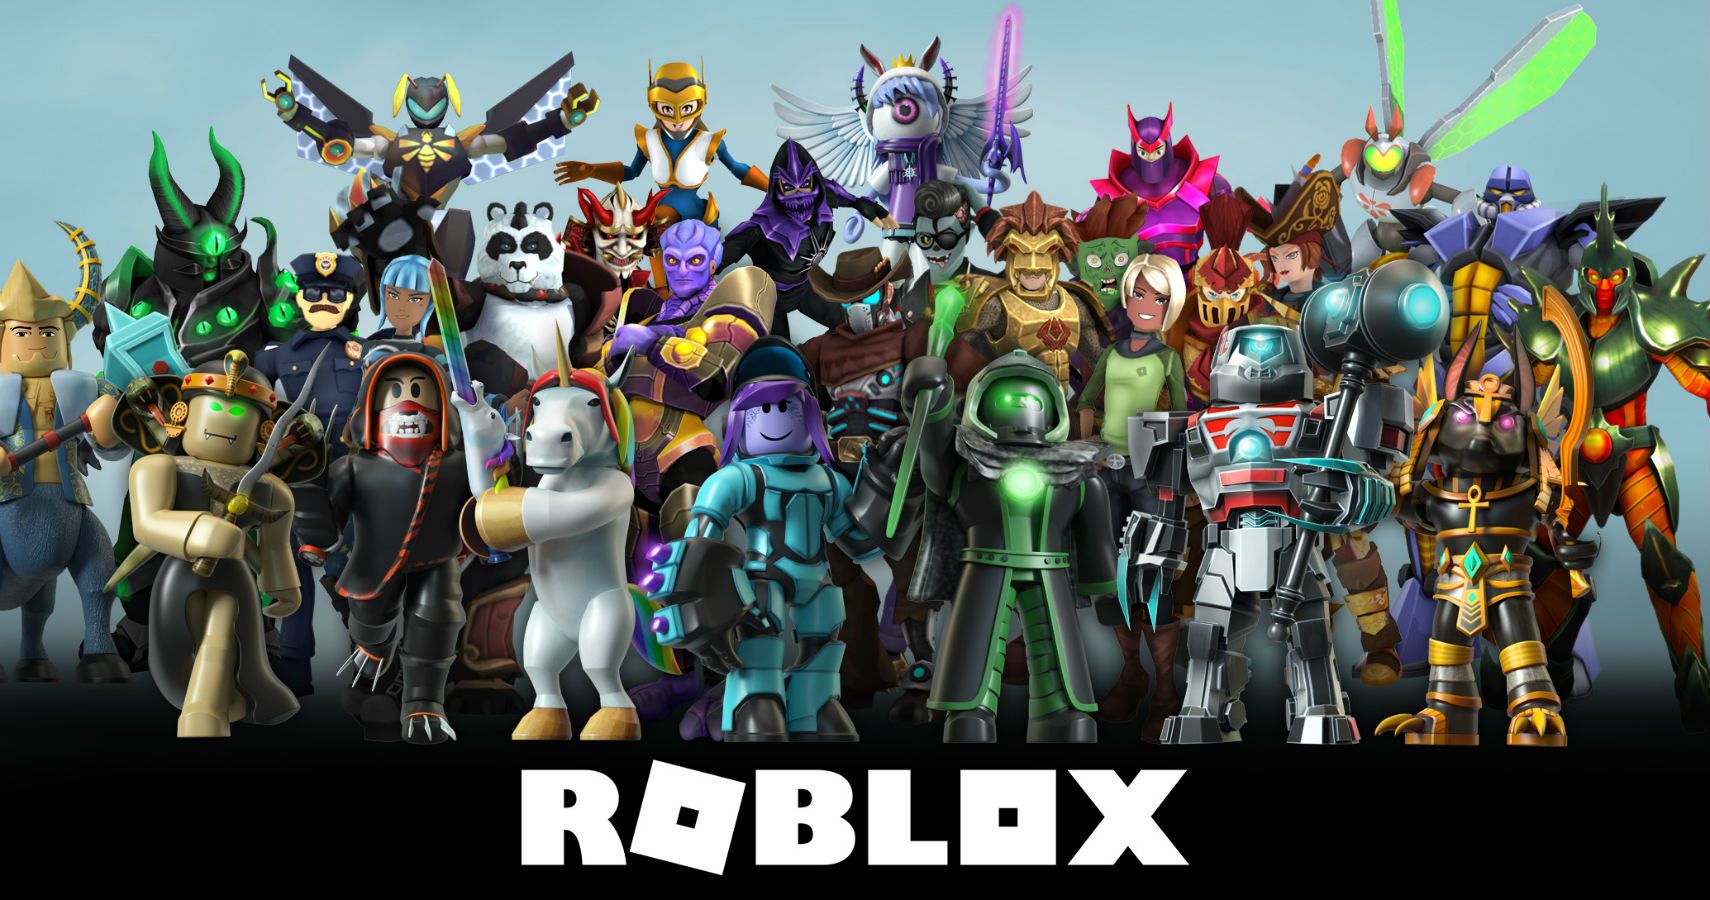 Roblox Now Has More Active Players Than Minecraft - roblox broken bones 4 tips